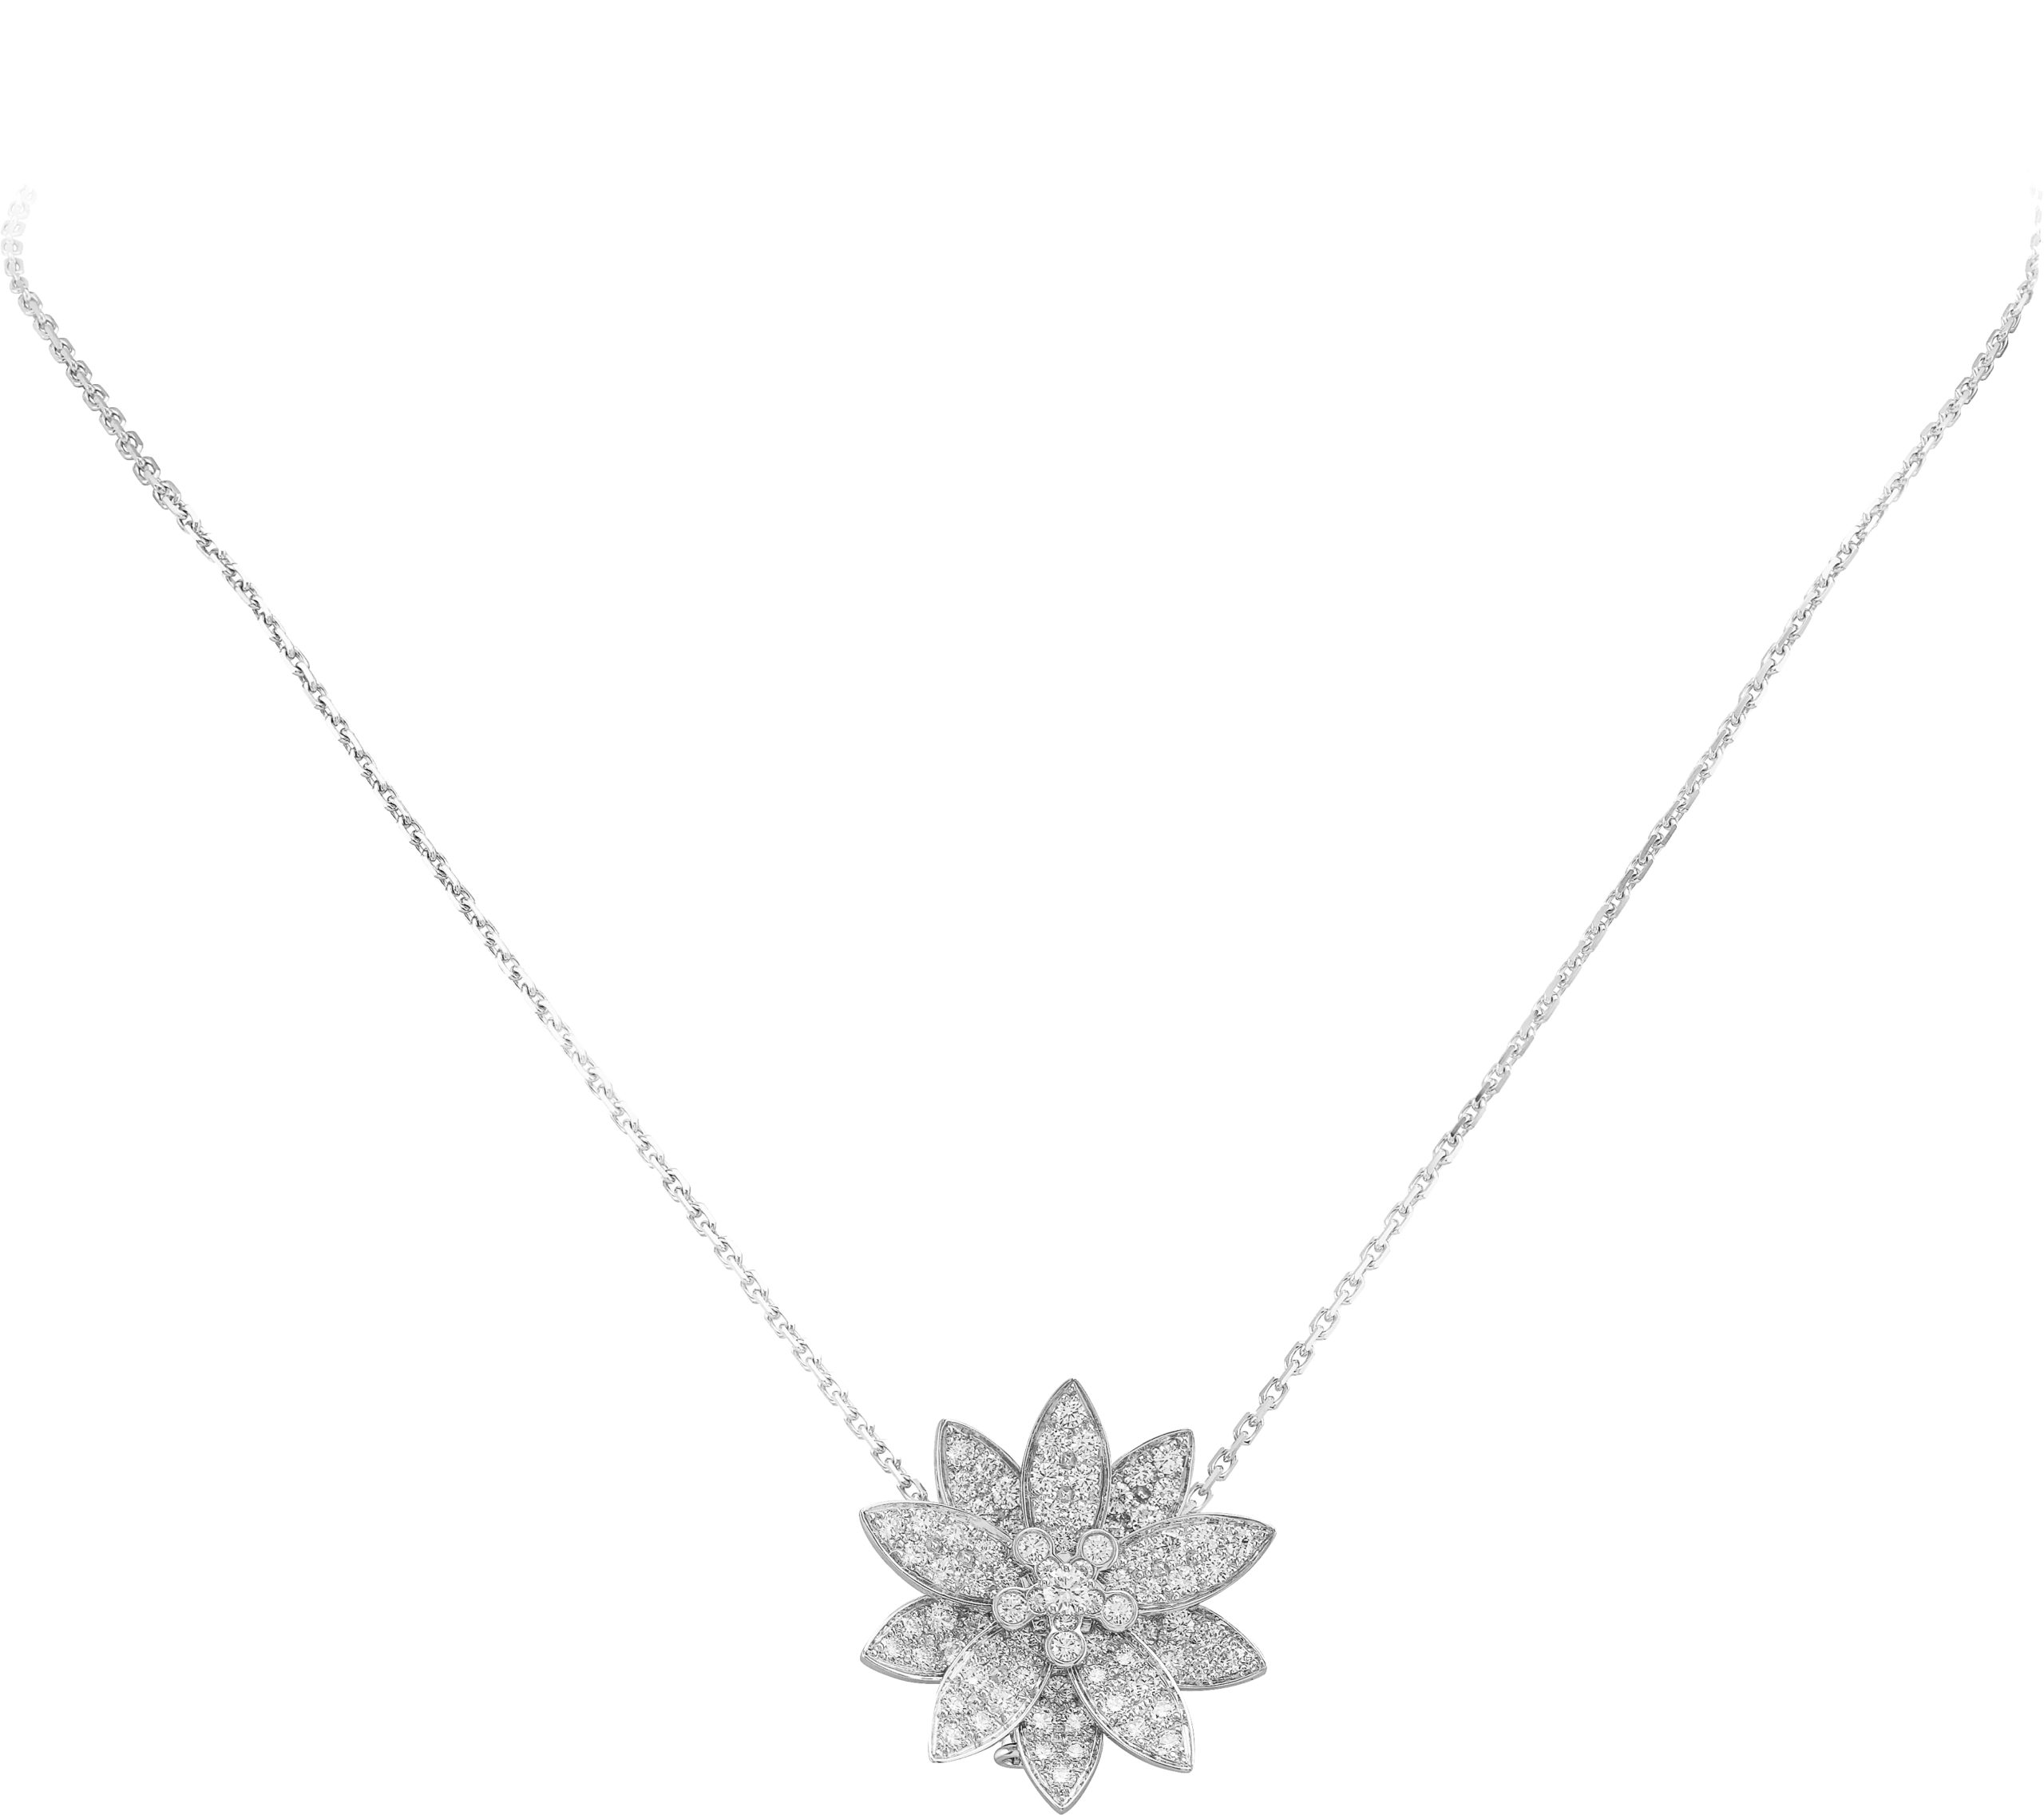 Van Cleef & Arpels presents lotus jewellery from the Diamond Breeze Series